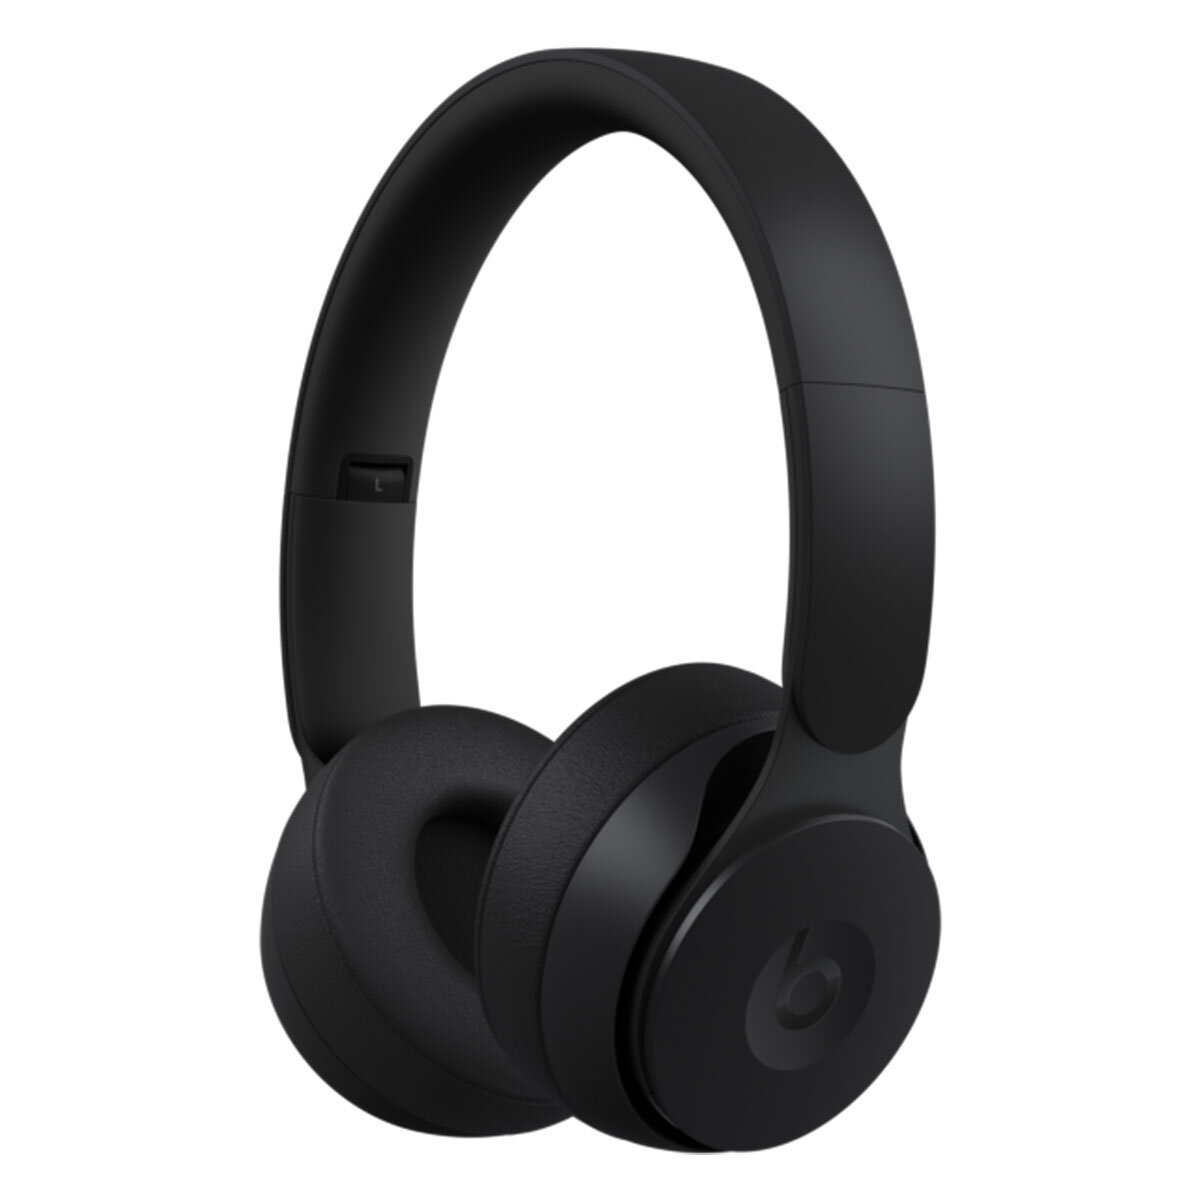 Buy Beats Solo Pro Wireless Noise Cancelling Headphones in Black, MRJ62ZM/A at costco.co.uk